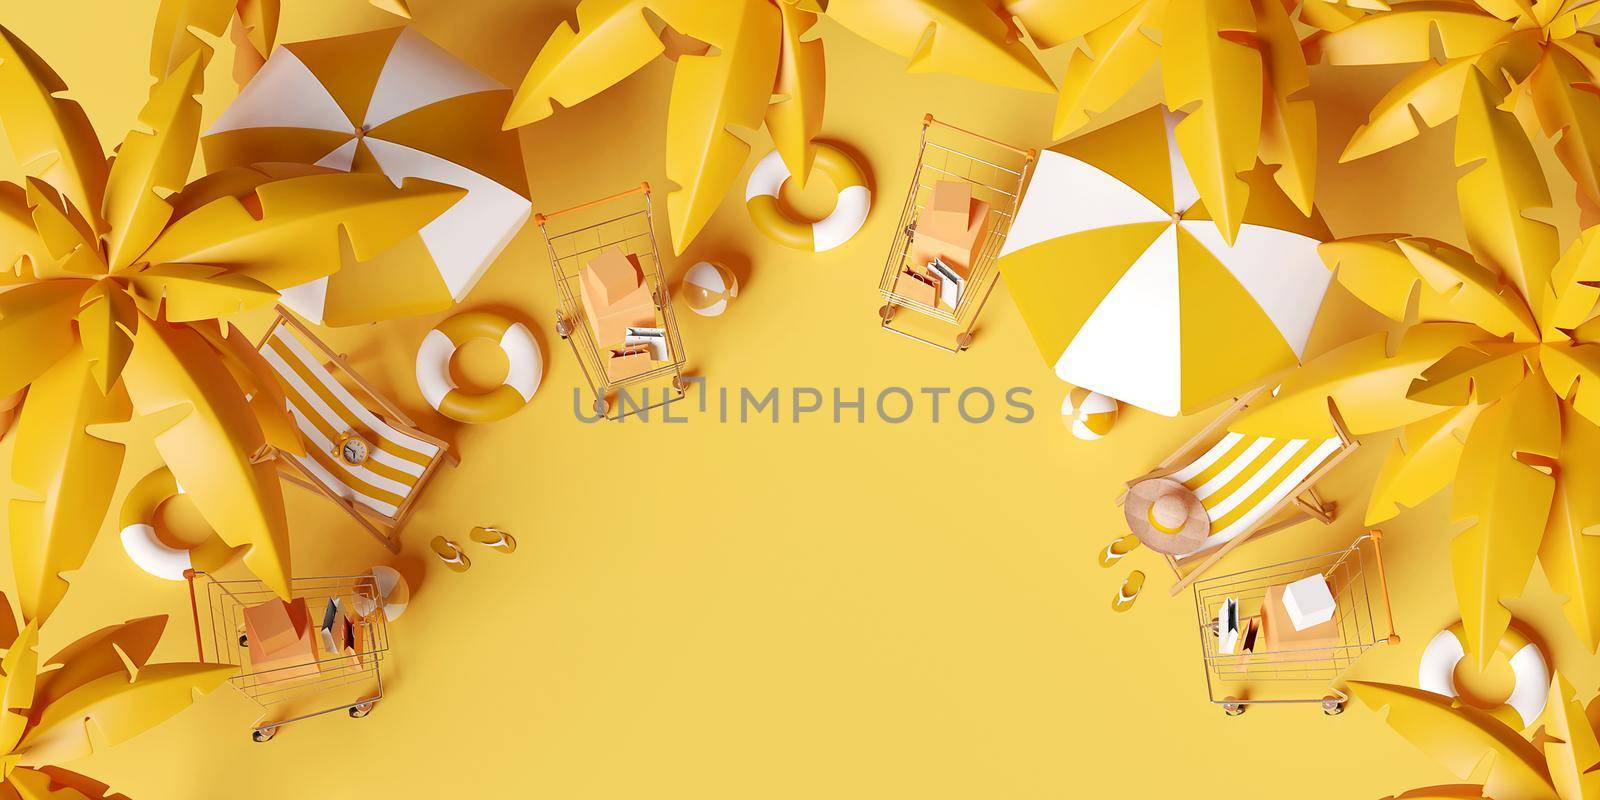 Summer sale banner, Shopping cart with beach accessories on yellow background, 3d illustration by nutzchotwarut